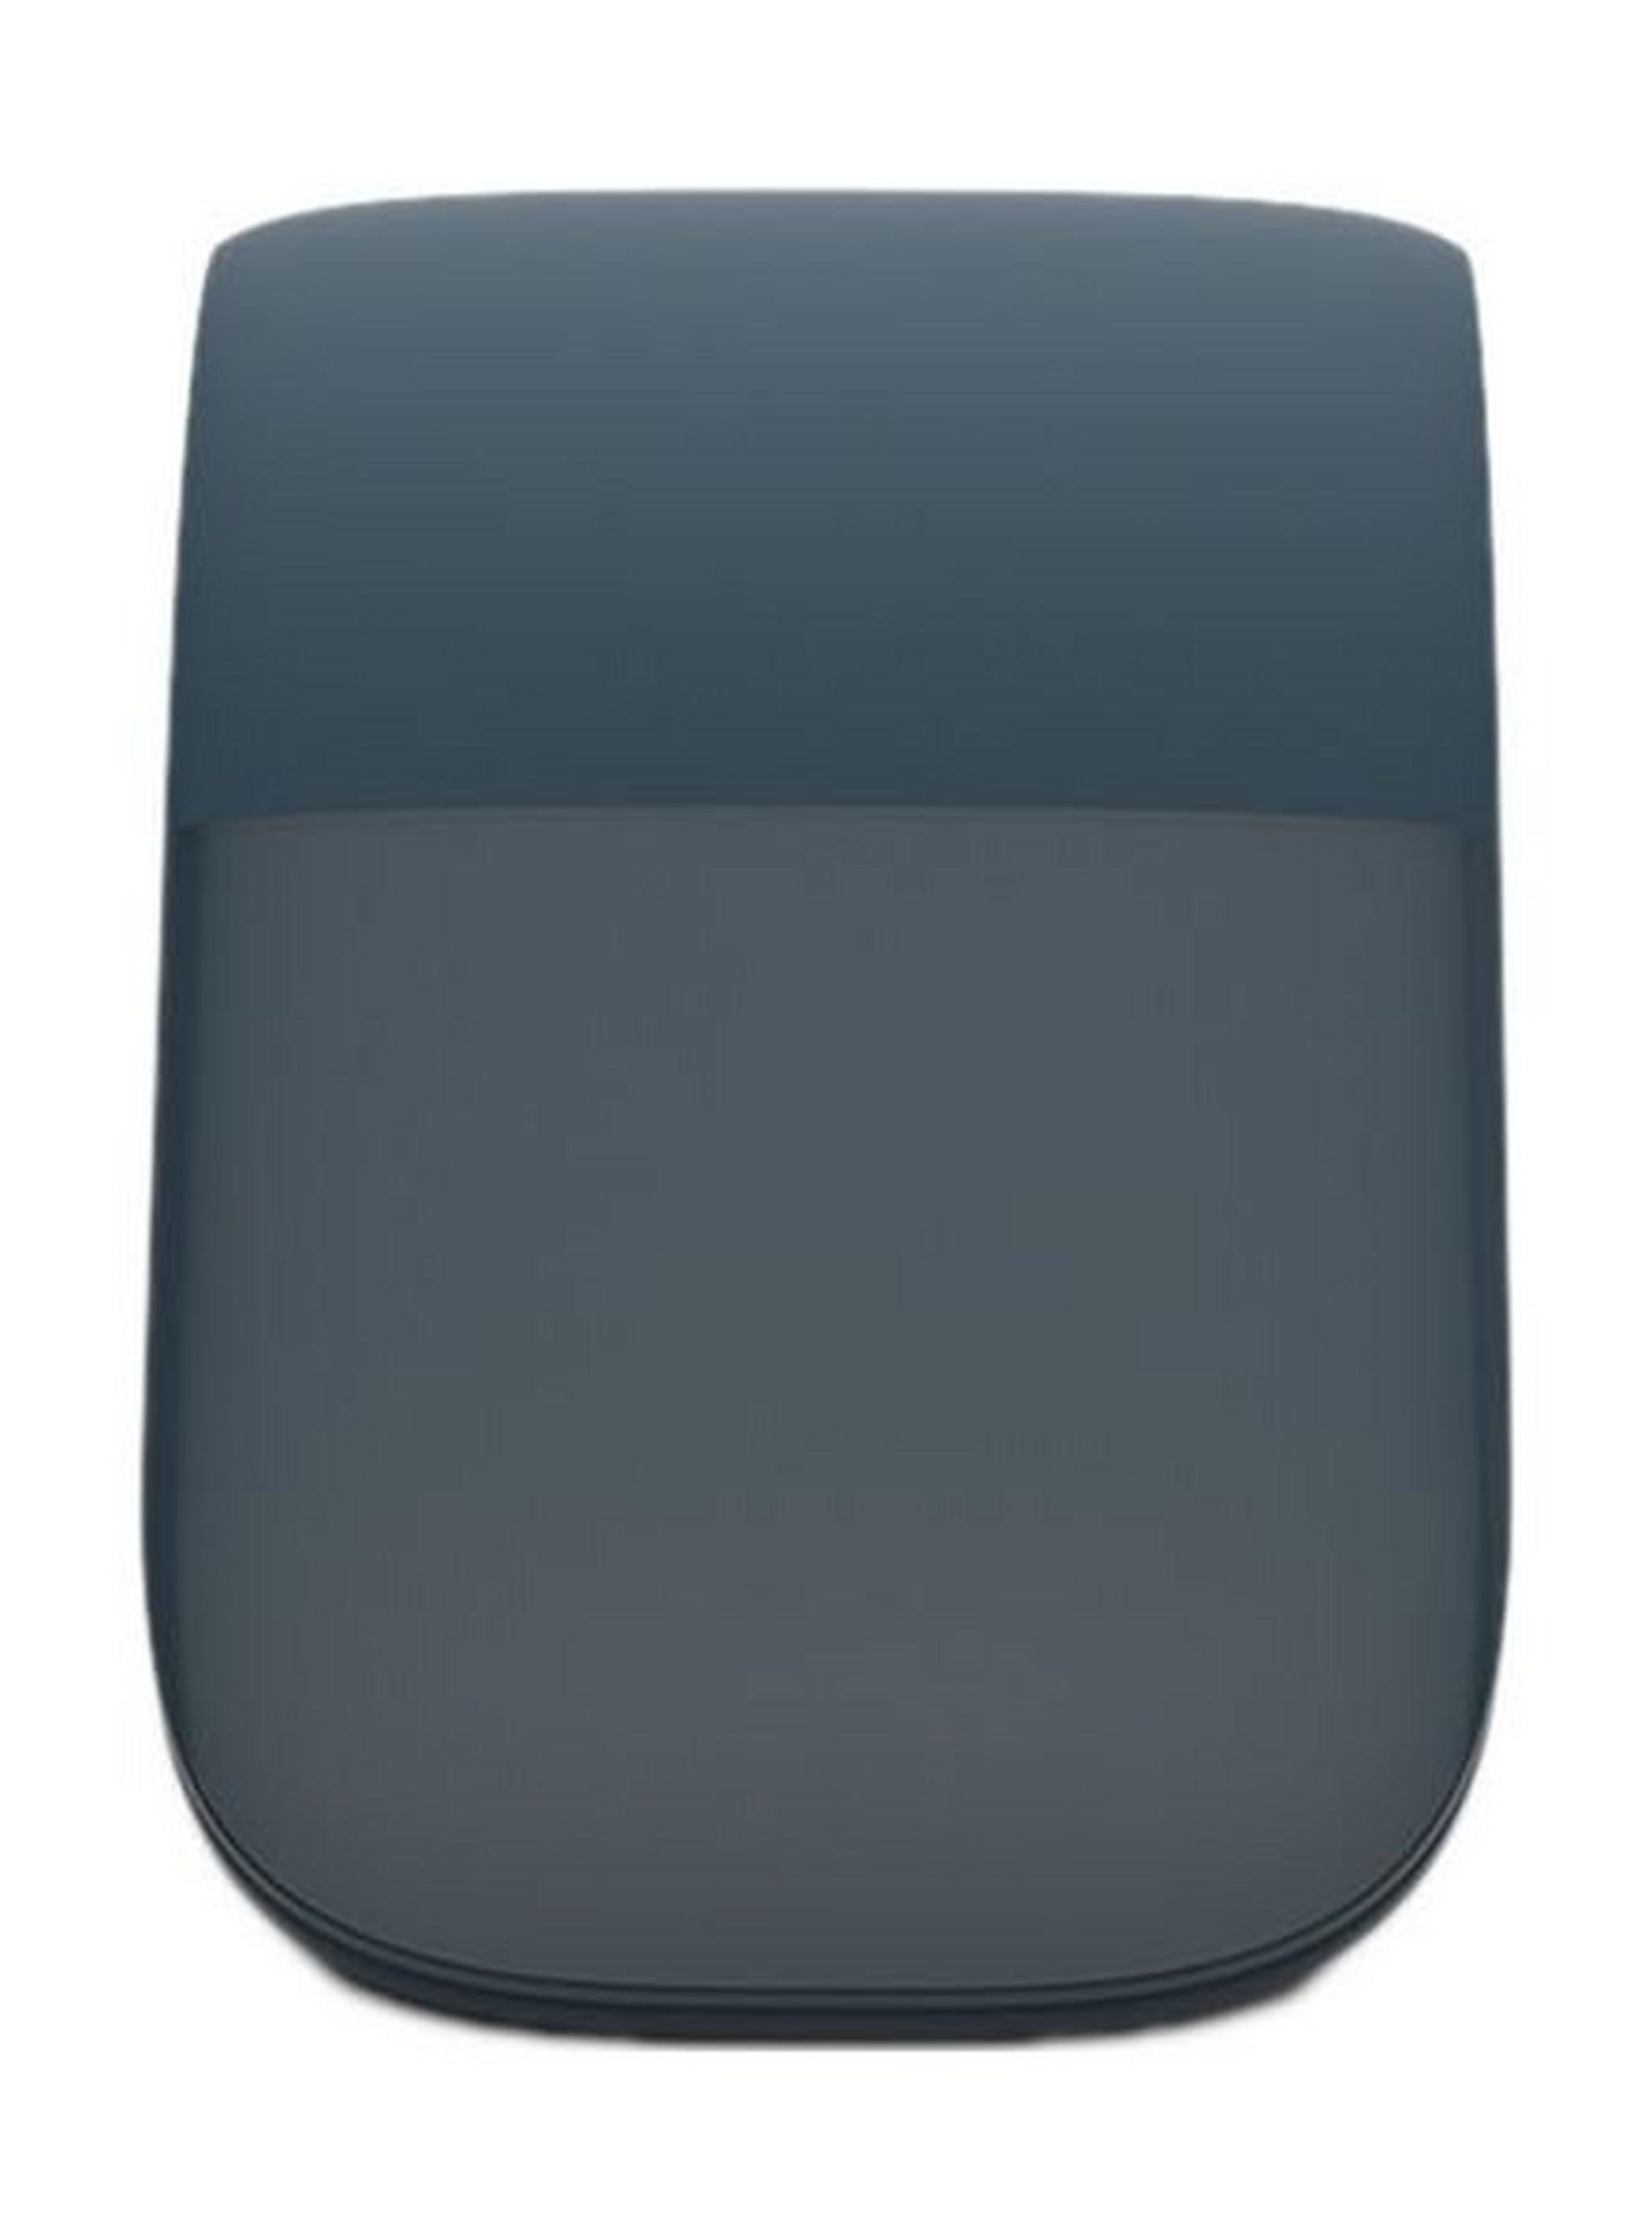 Microsoft Surface Arc Wireless Mouse - Cobalt Blue